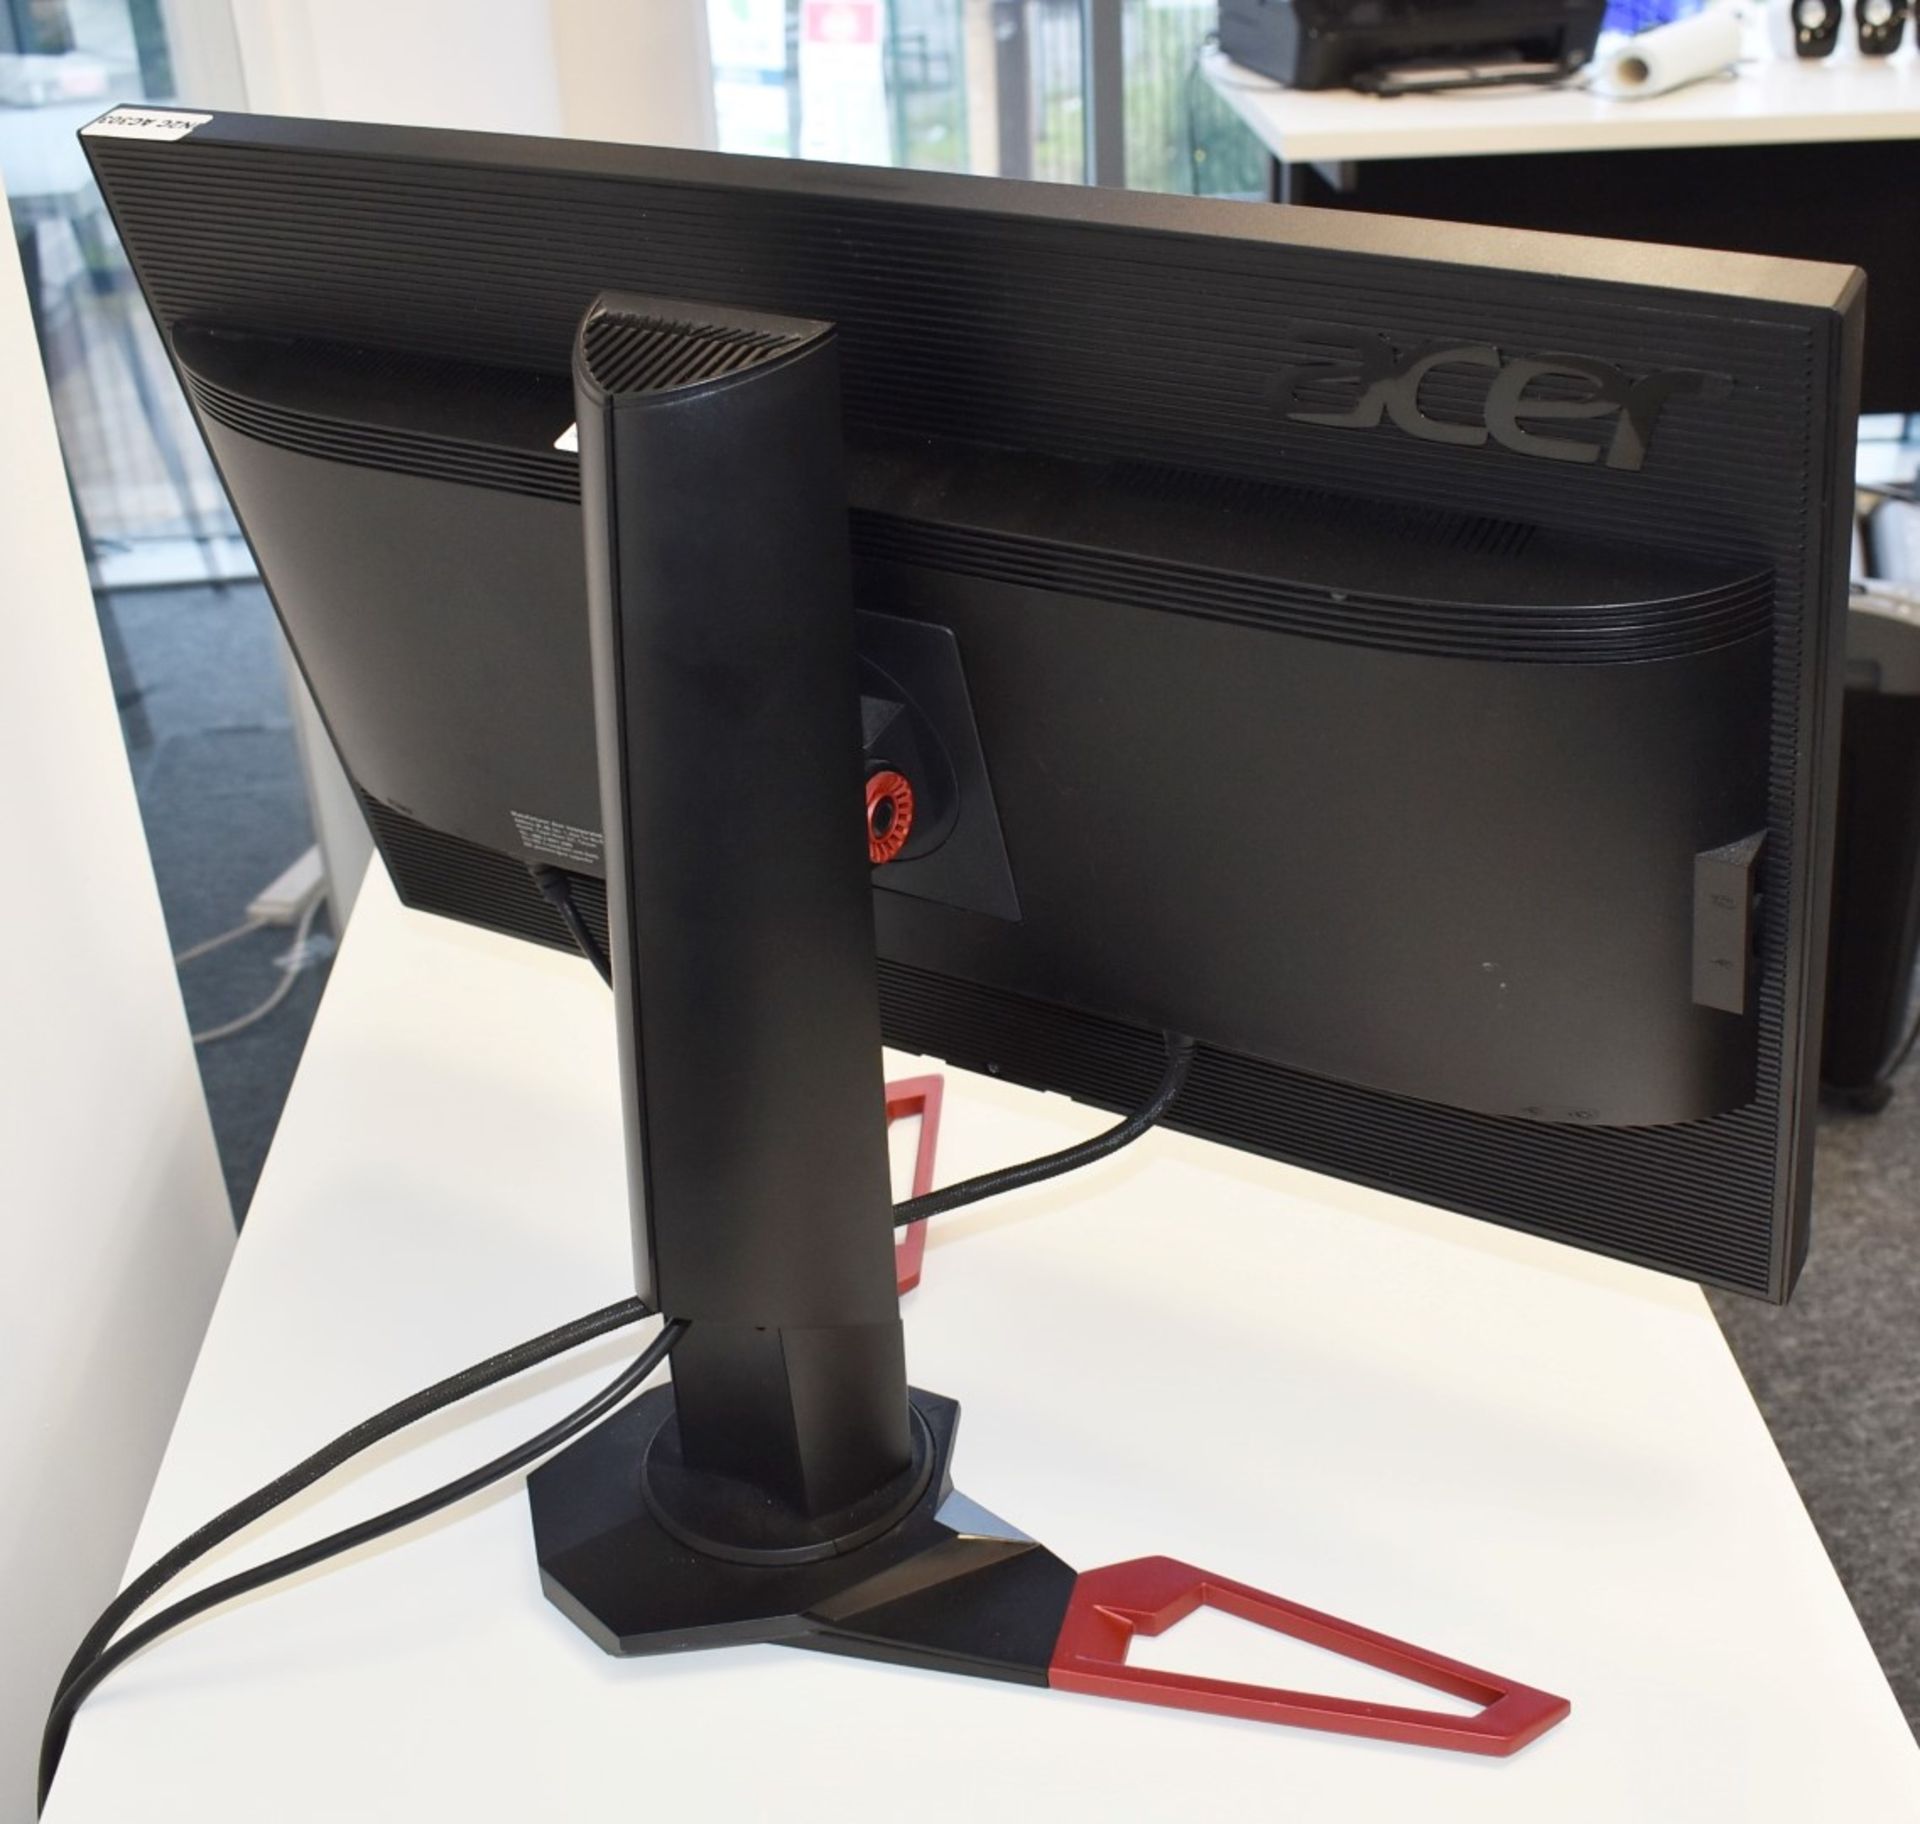 1 x Acer Predator 27 Inch 1440p LED Gaming Monitor - Model XB271HU - 2560 x 1440 Resolution - Image 6 of 6